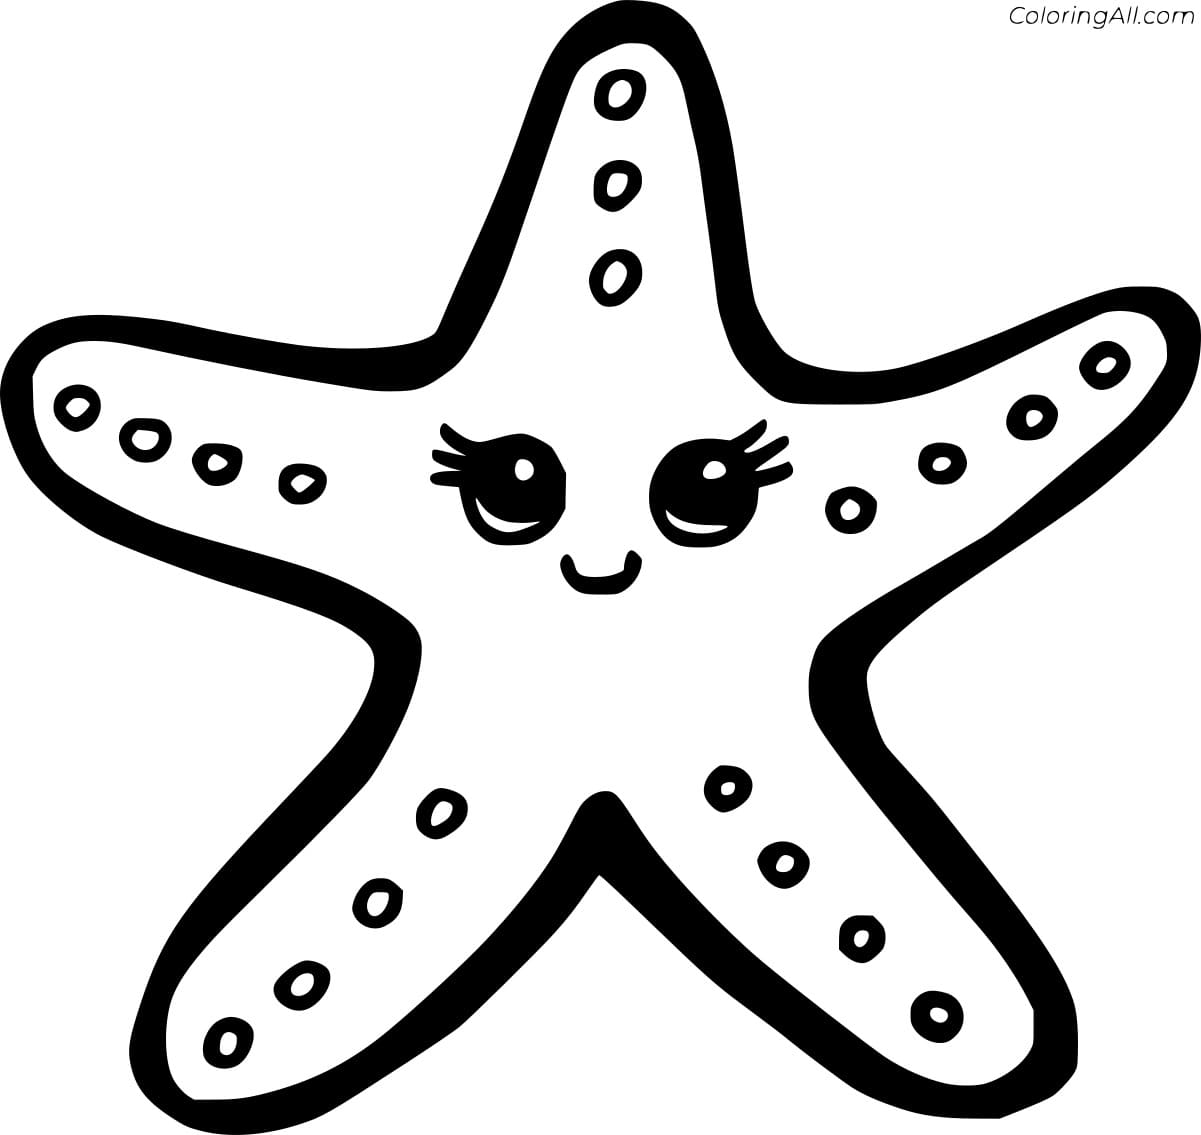 Cute Cartoon Starfish Image Coloring Page